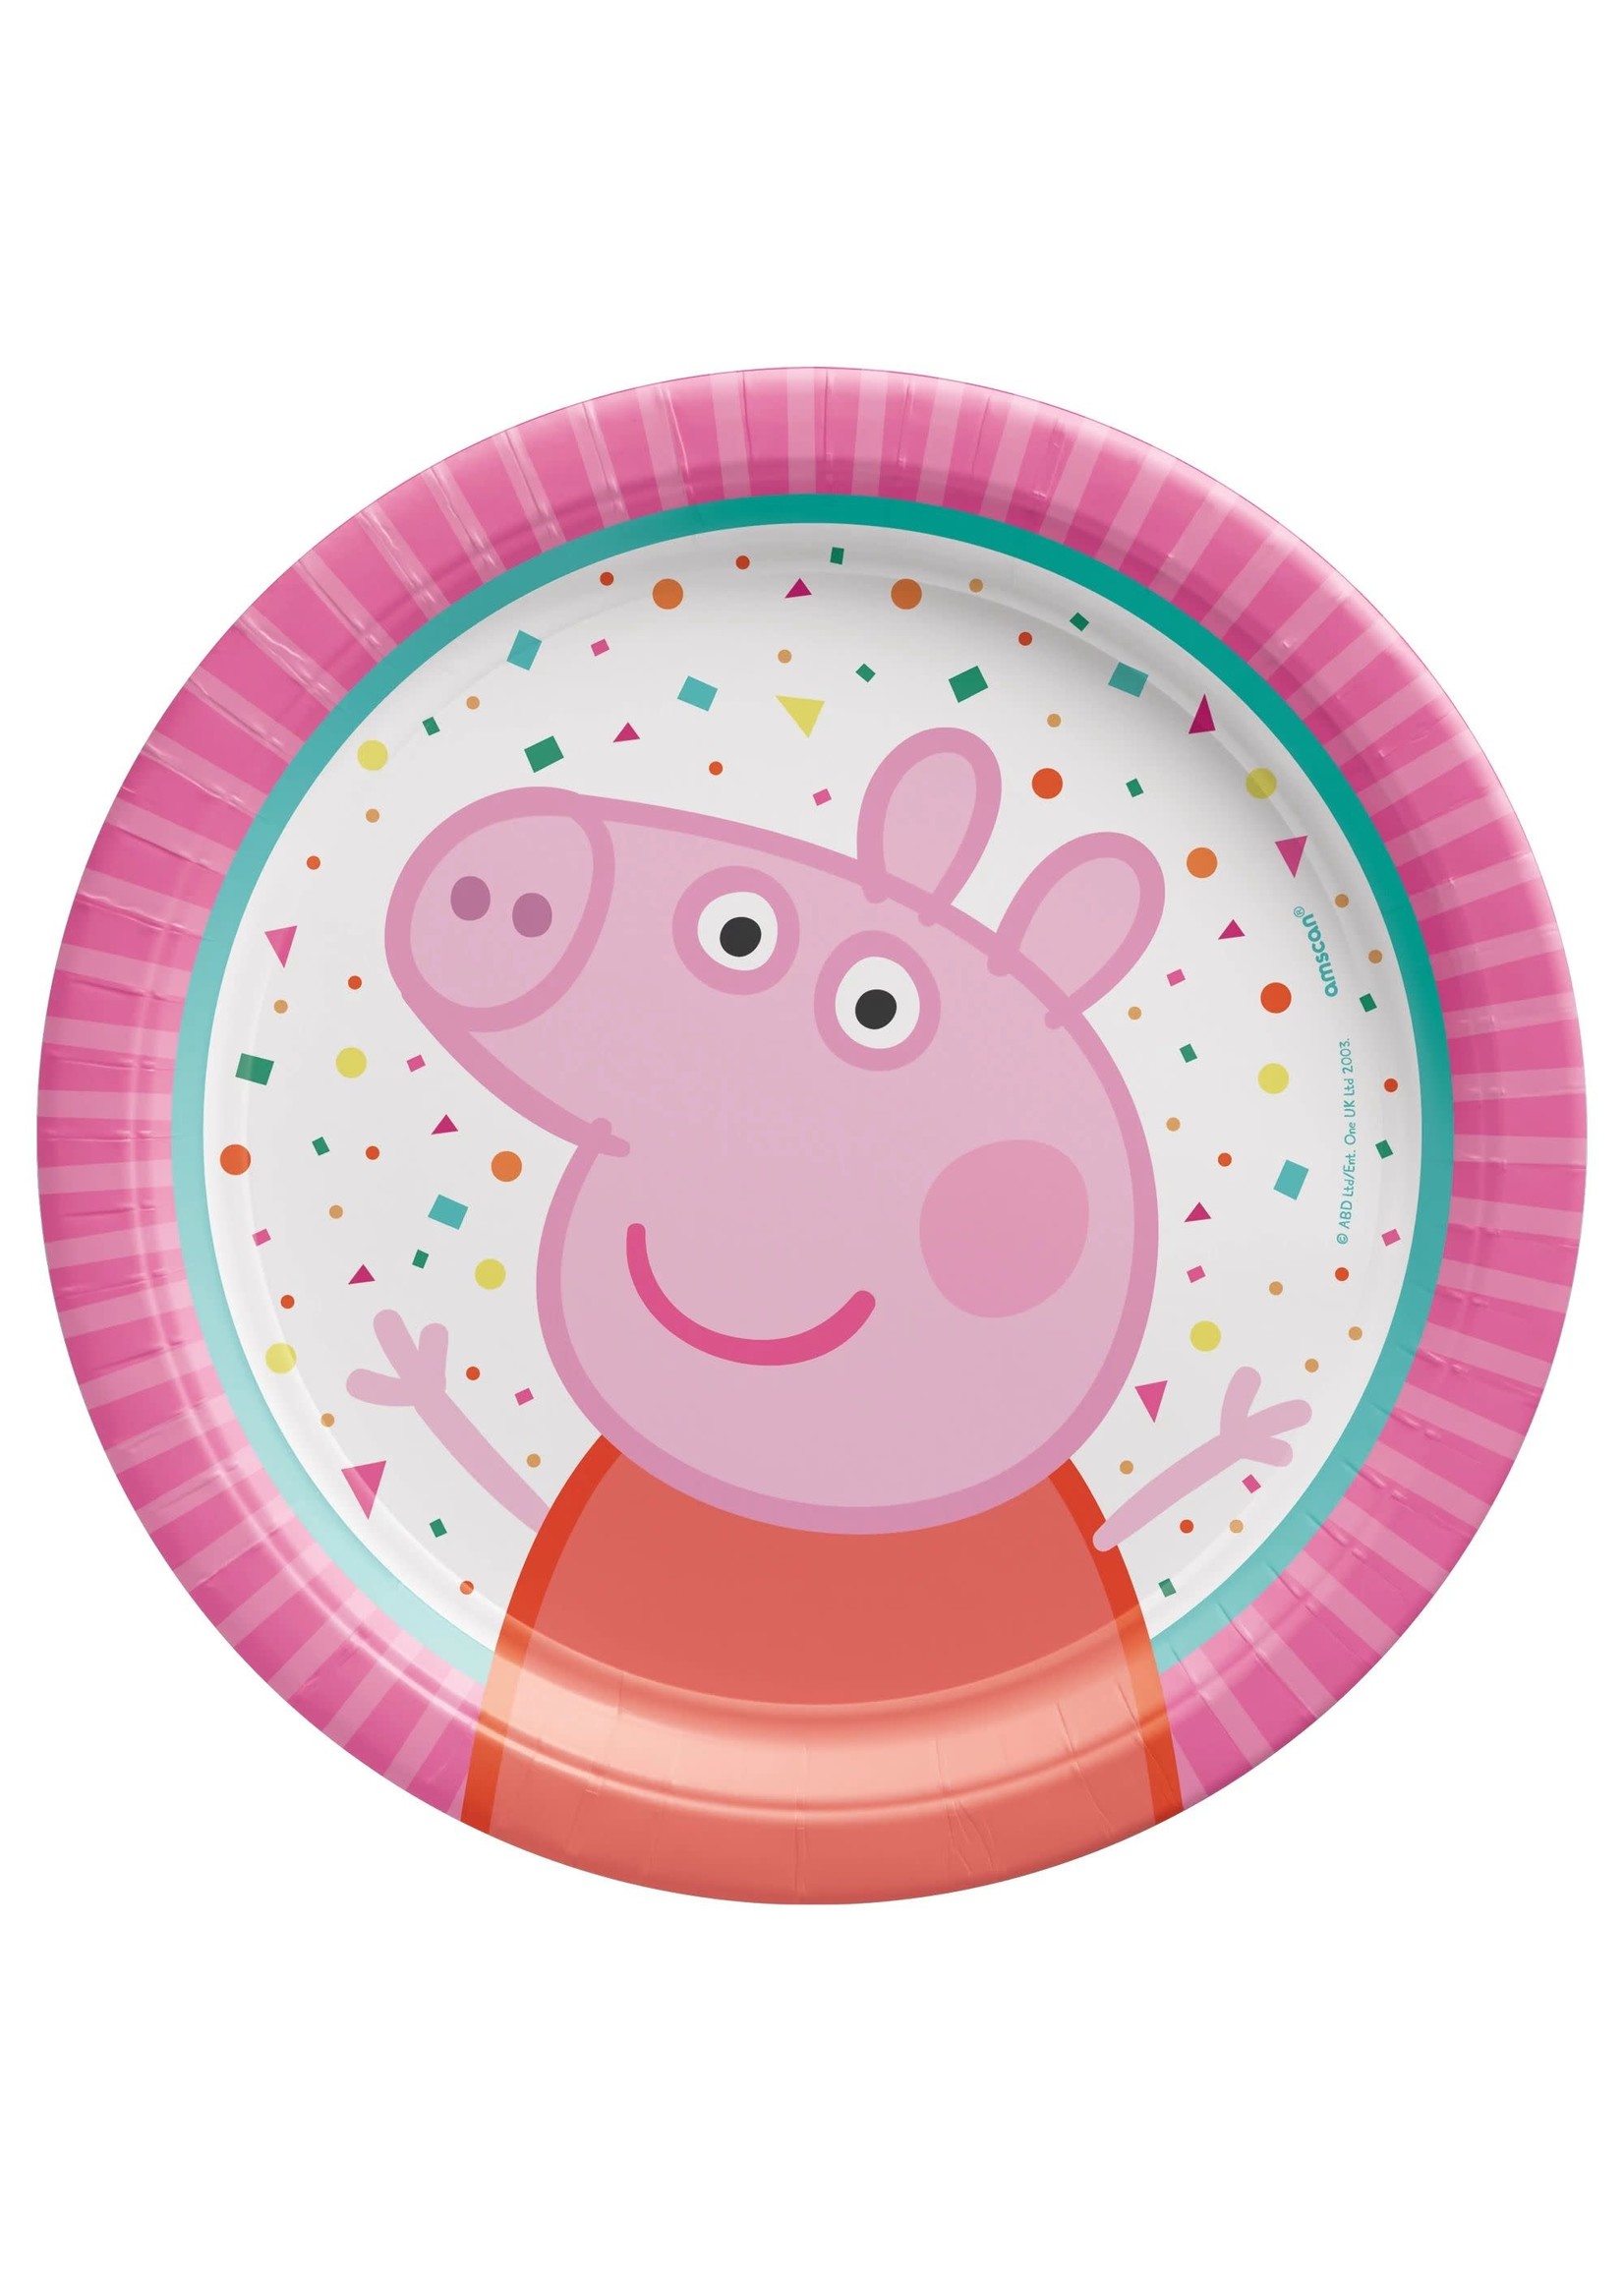 Peppa Pig Confetti Party Dessert Plates - 8ct